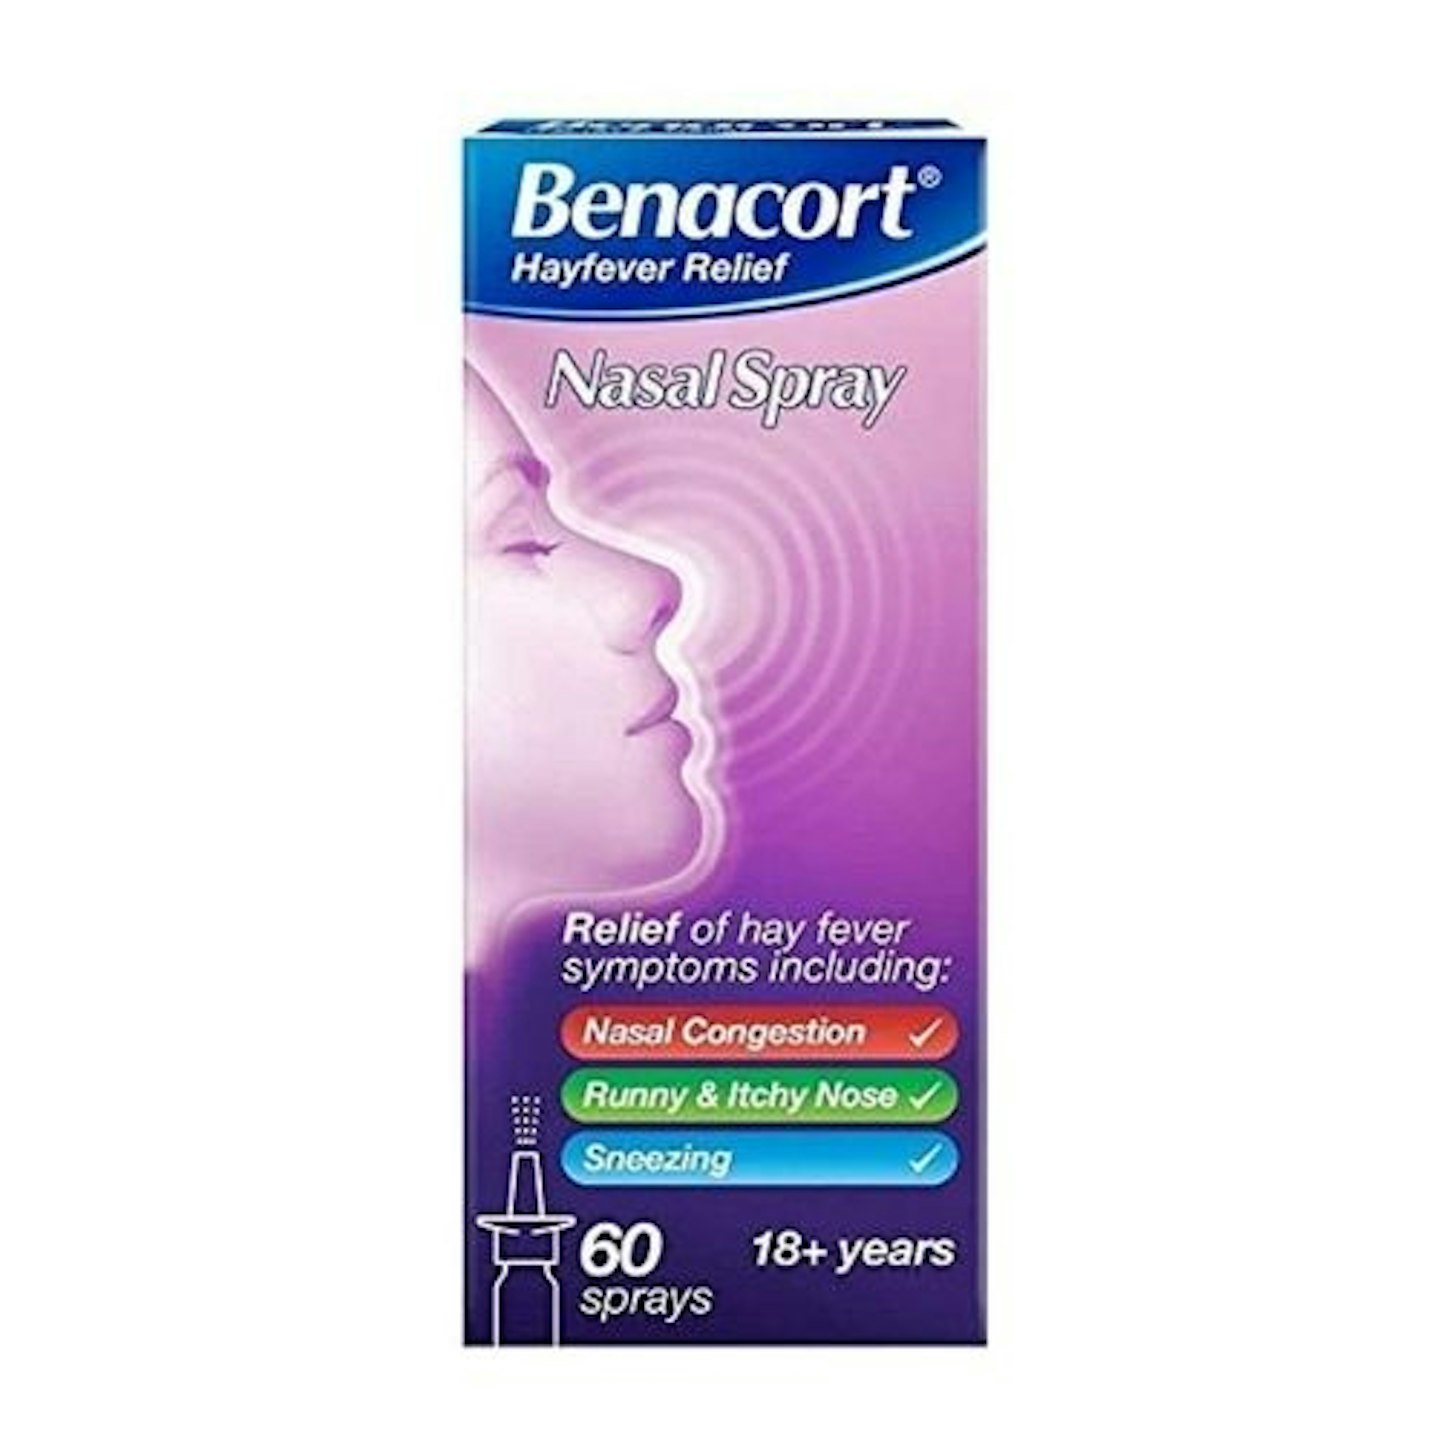 Benacort Hayfever Relief Nasal Spray